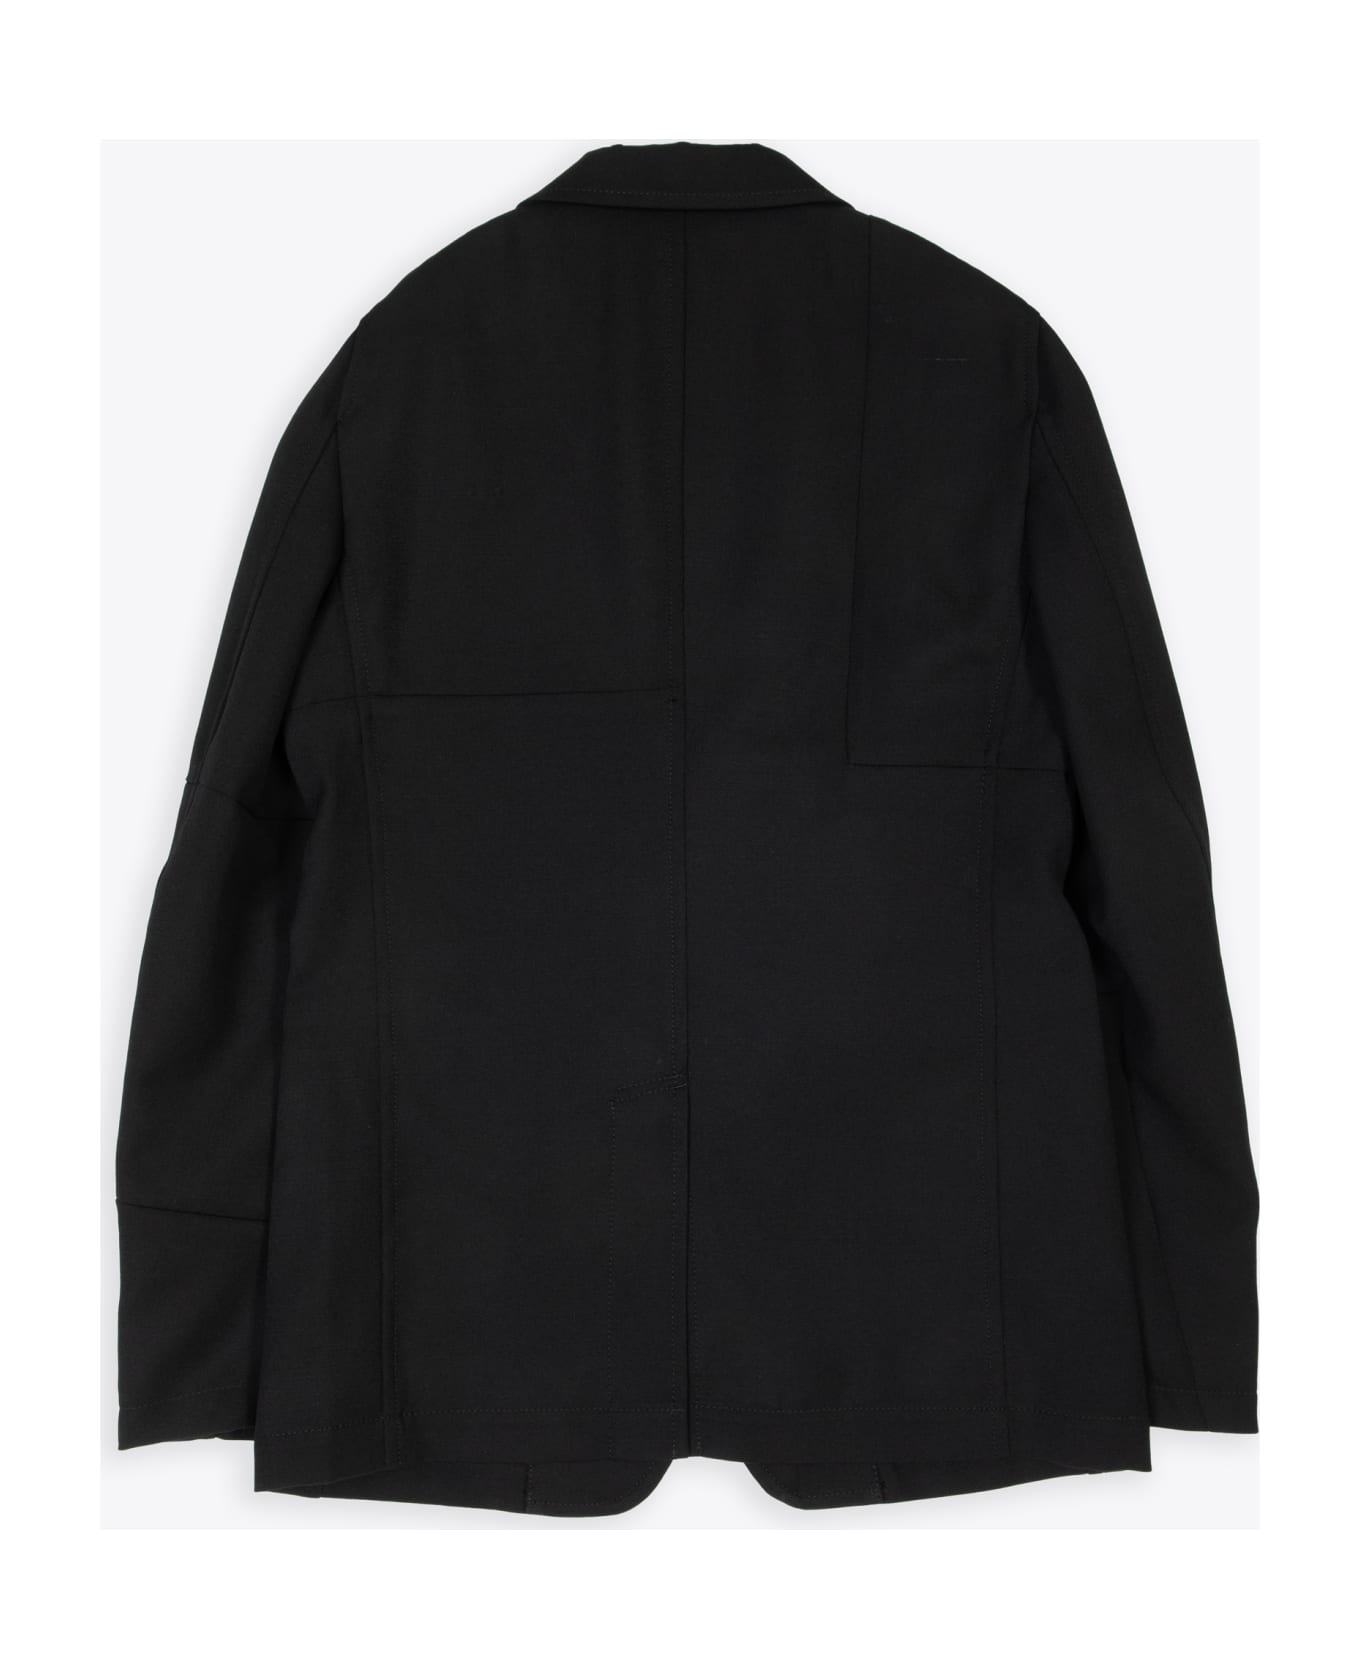 Comme des Garçons Shirt Mens Jacket Woven Black wool patchwork blazer with peak lapel - Nero ブレザー